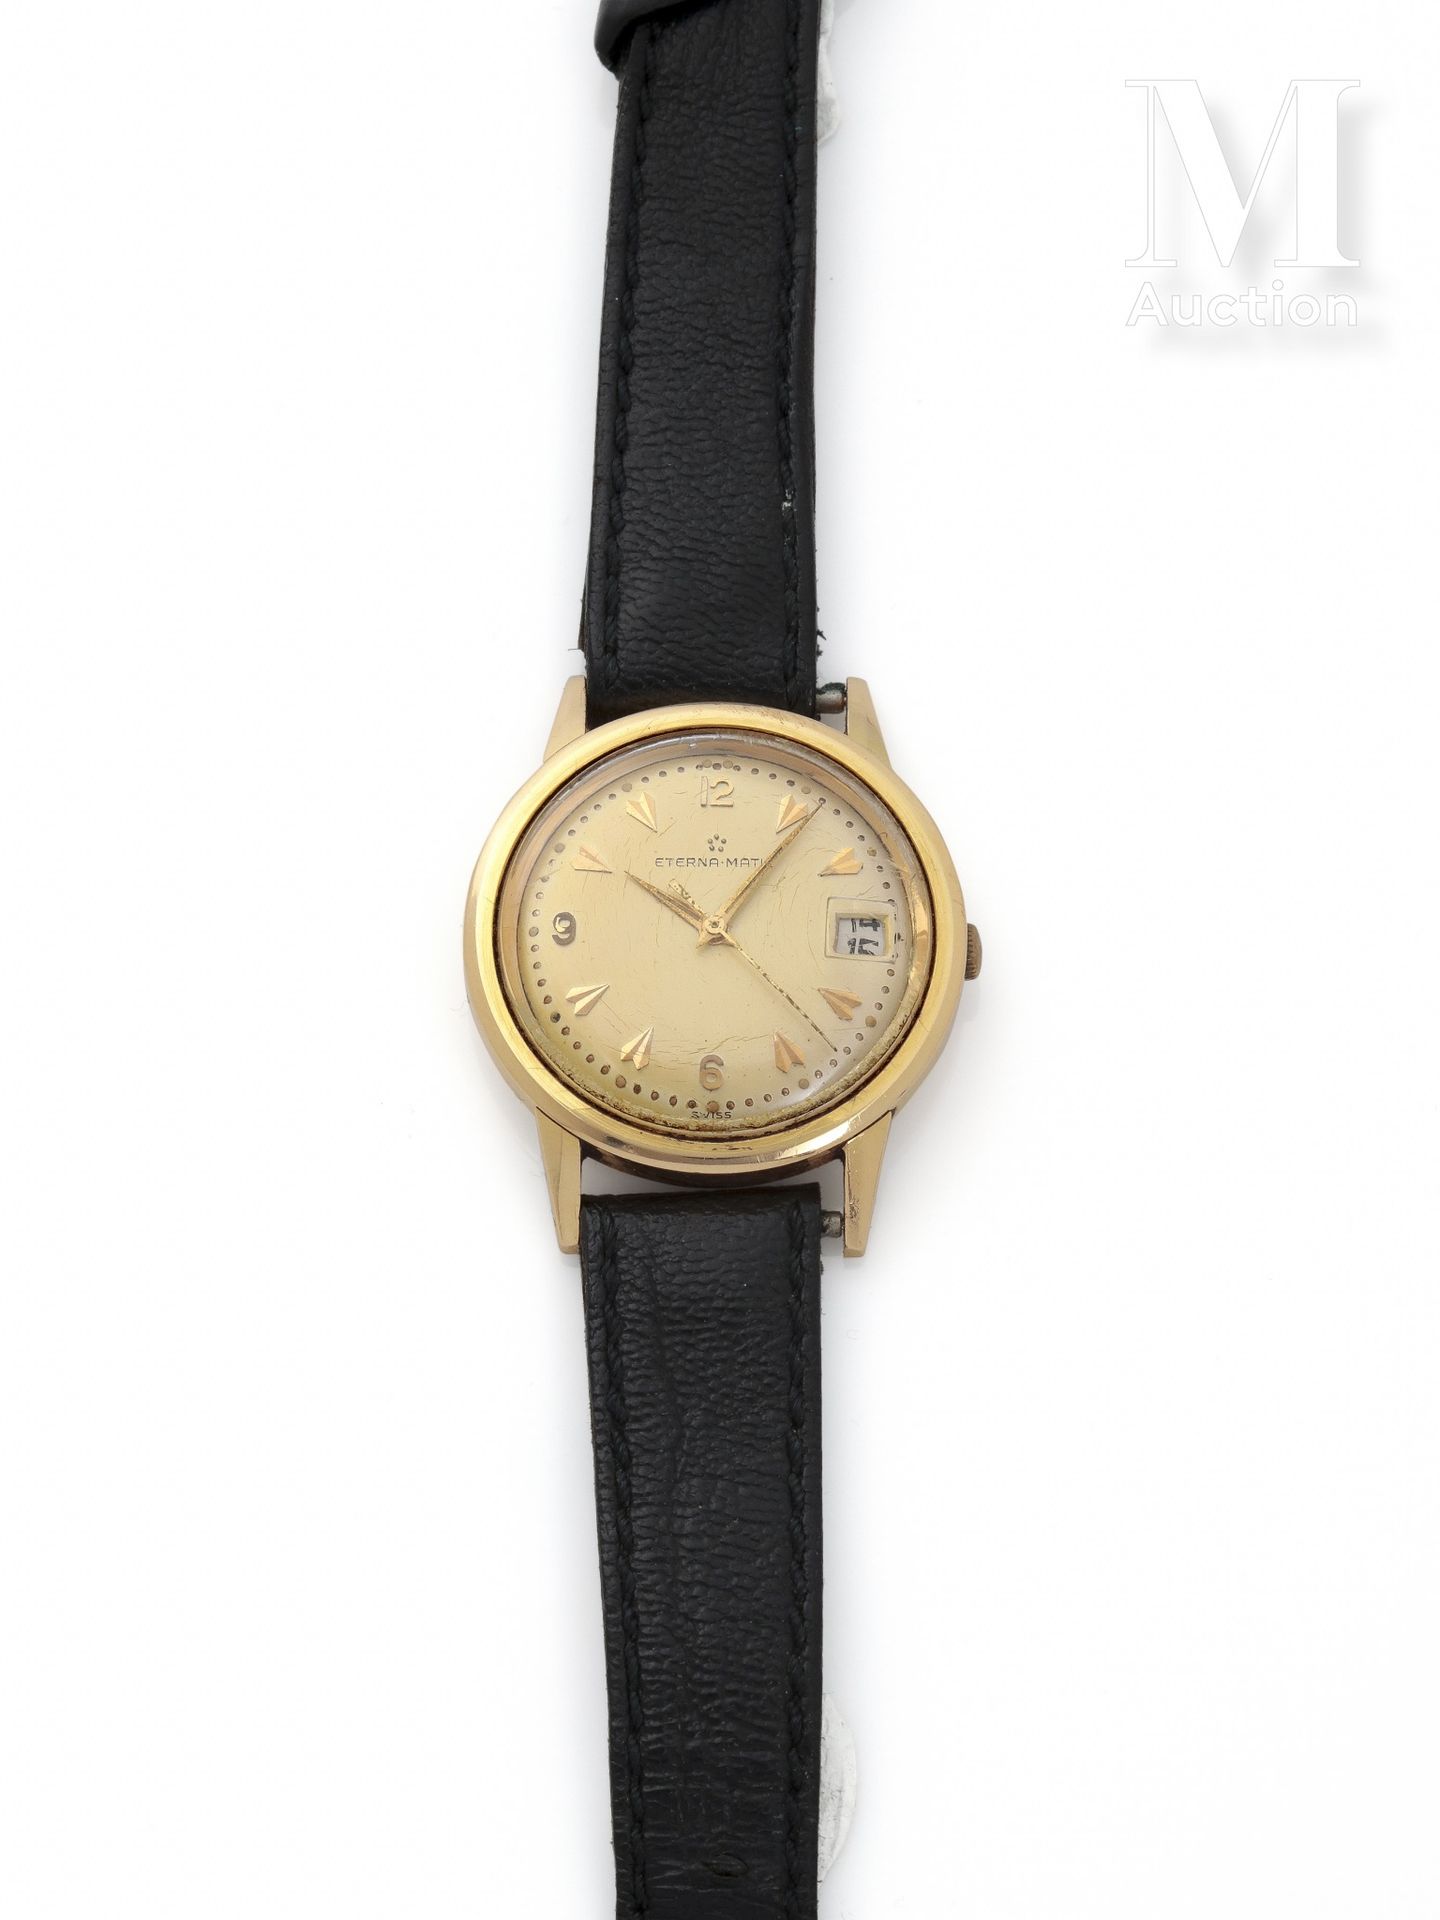 ETERNA-MATIC Reloj de hombre

Alrededor de 1960

Caja de oro de 18 quilates 

Mo&hellip;